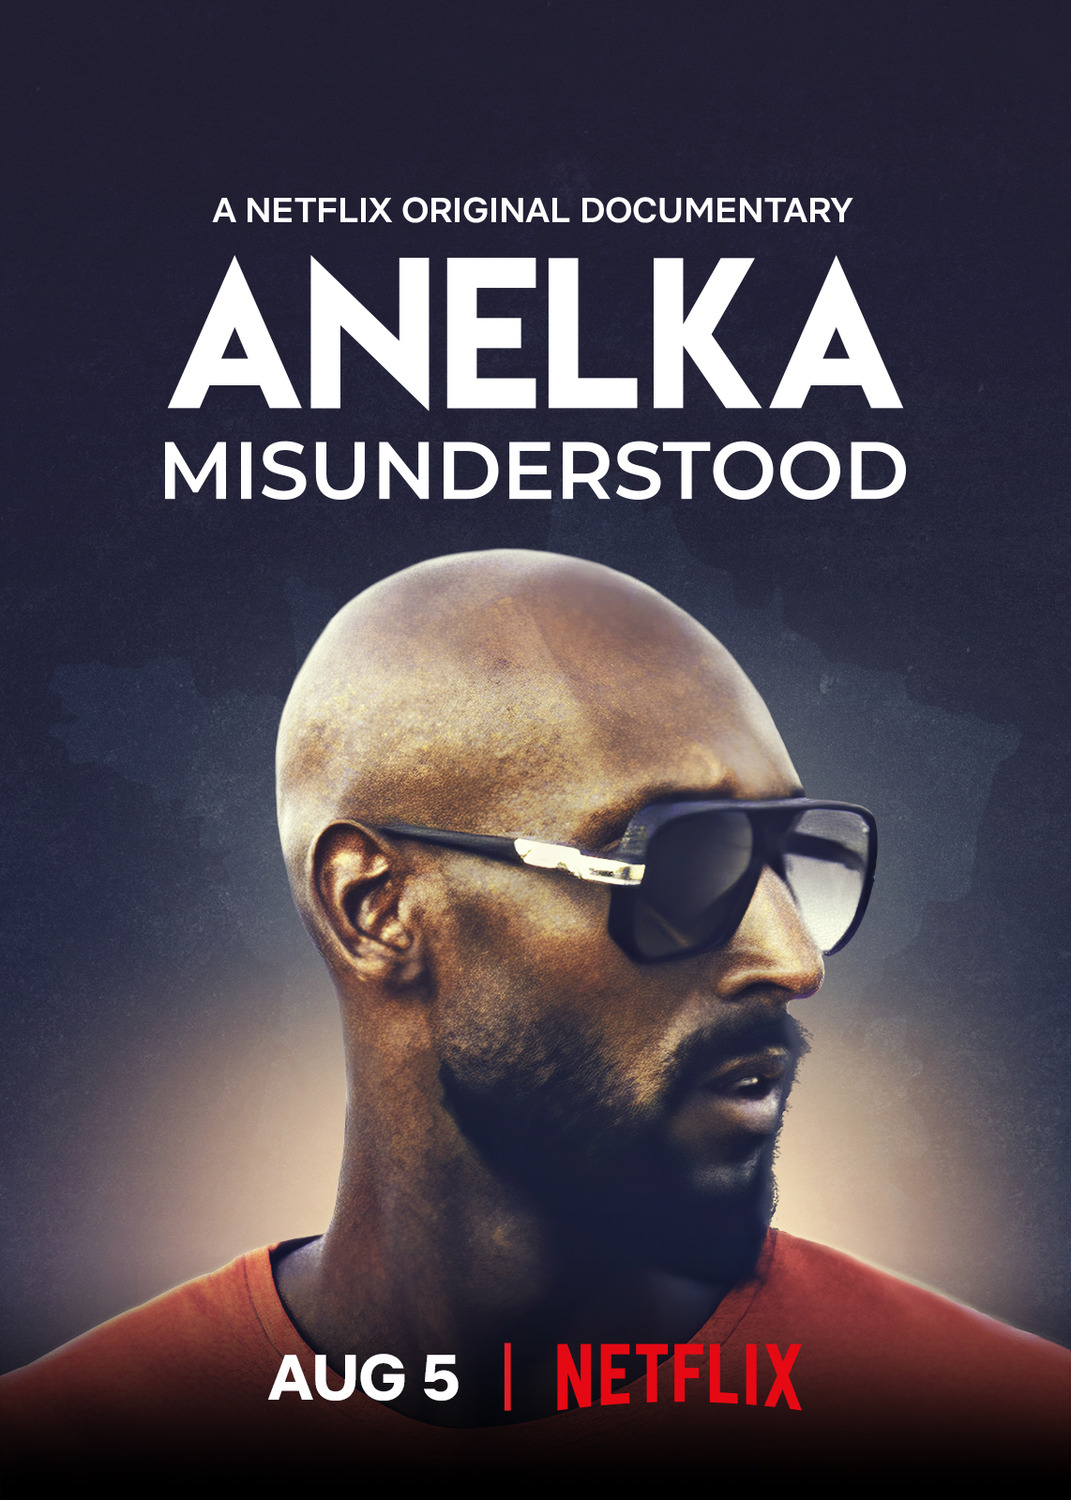 Extra Large TV Poster Image for Anelka: Misunderstood 